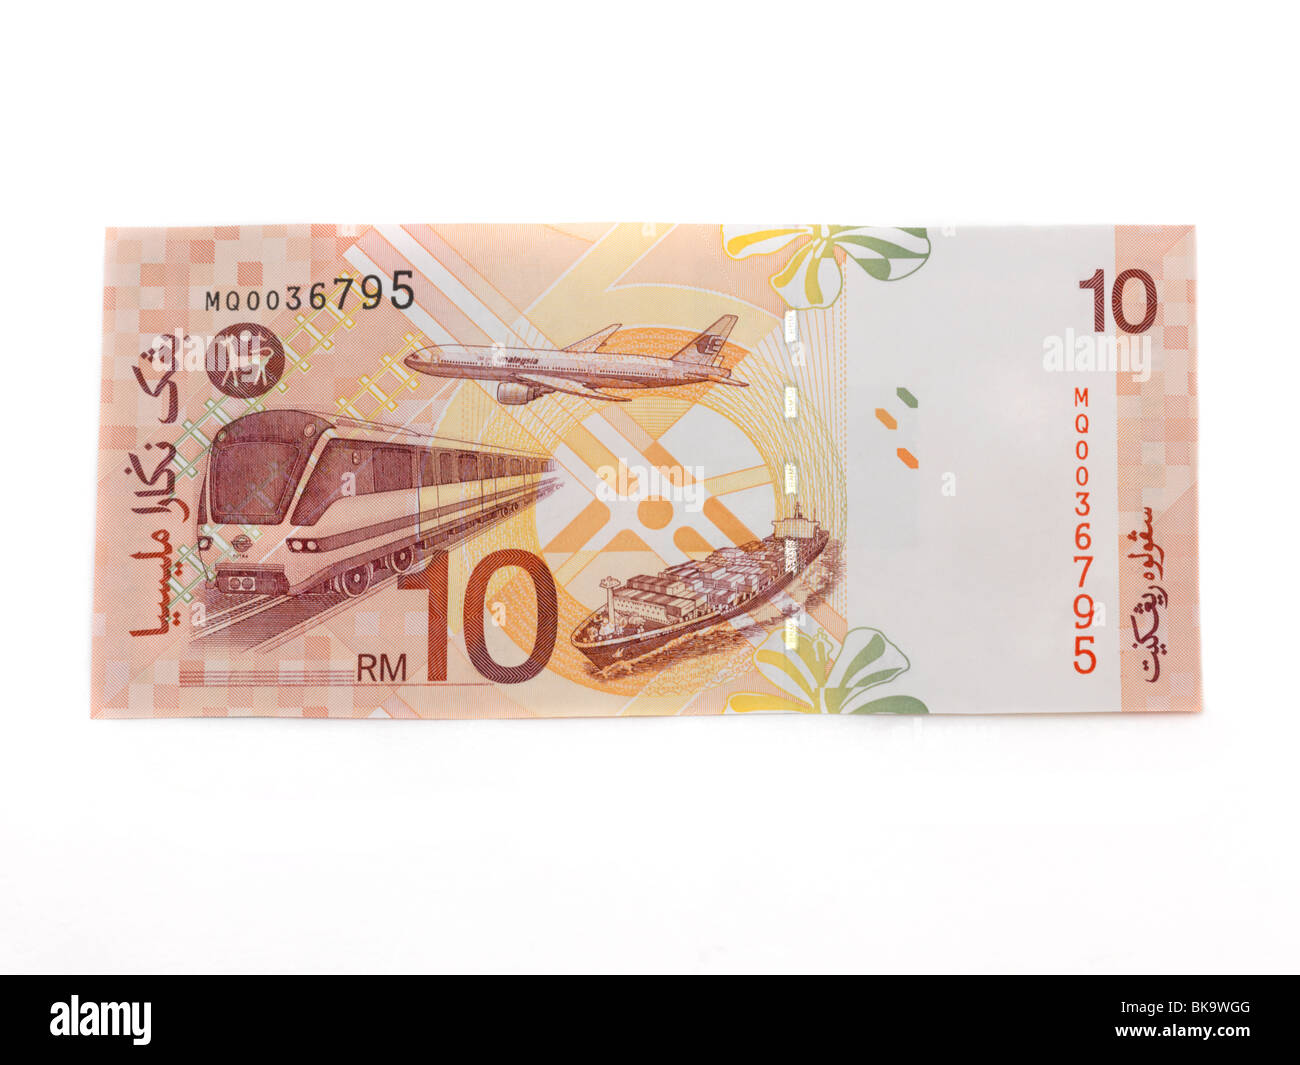 Malaysian Banknote 10 Ringgit Stock Photo